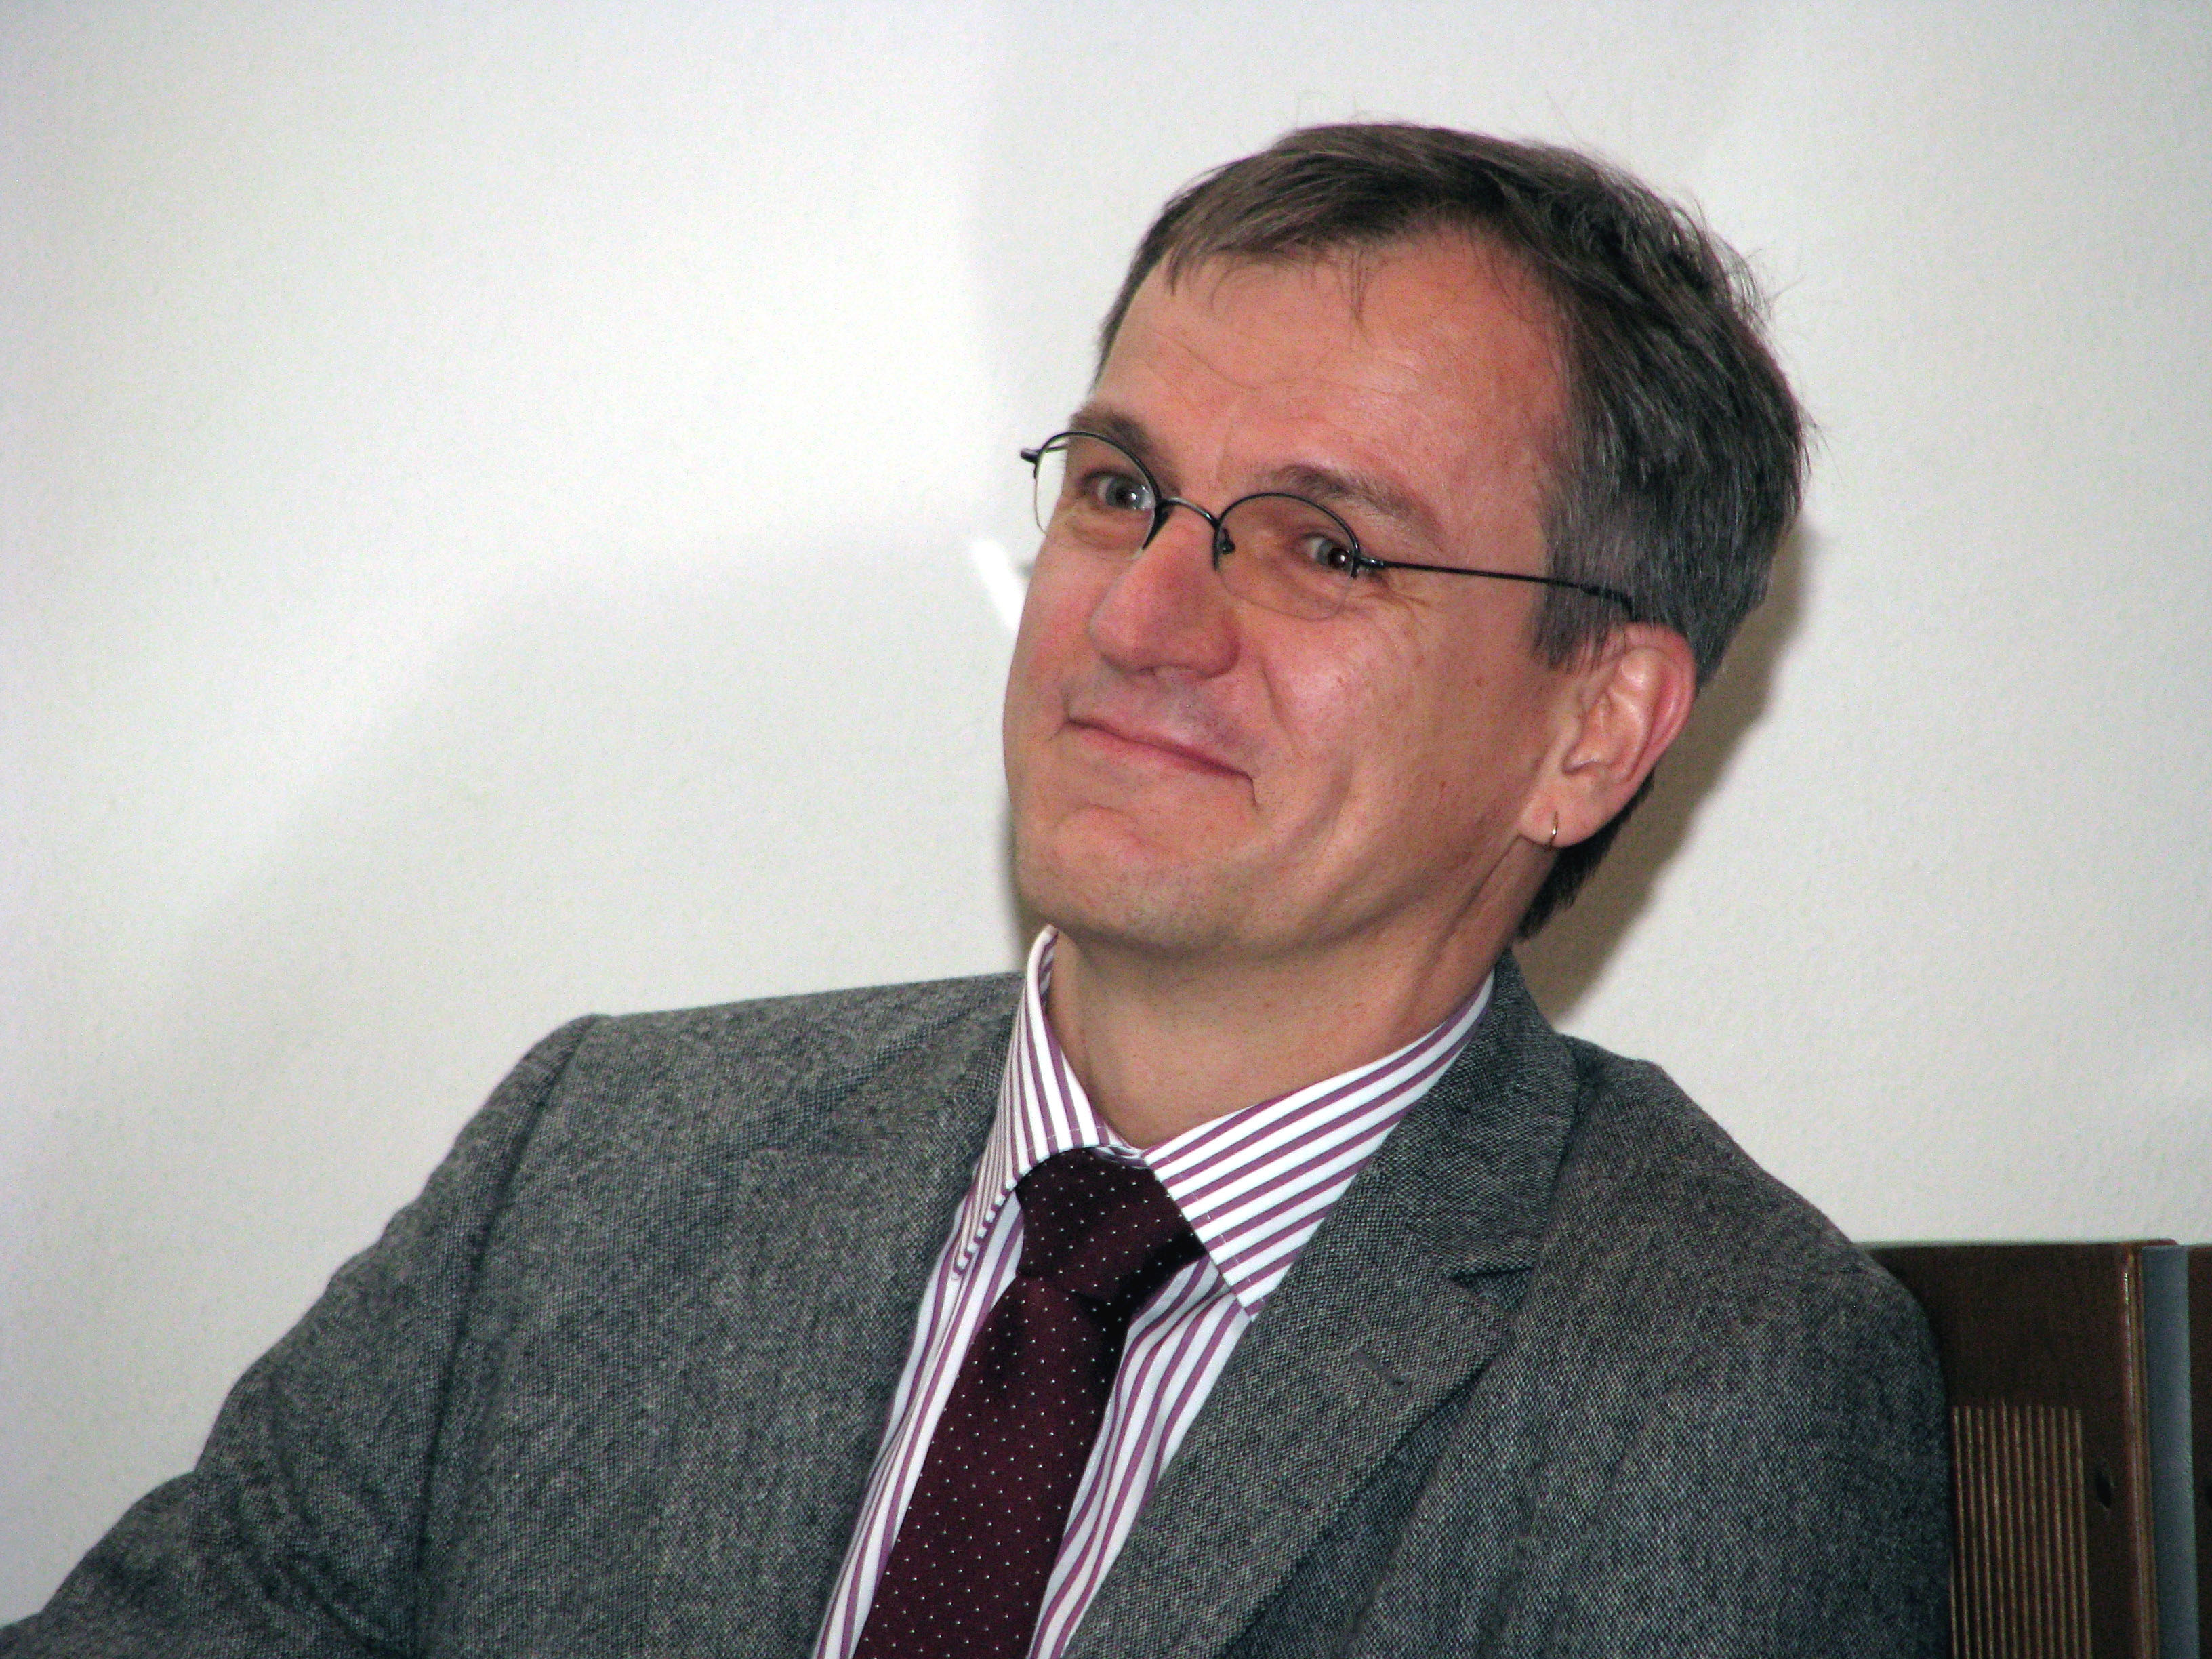 04. Dr. Nils Stein, Wricke-Preistrger 2010